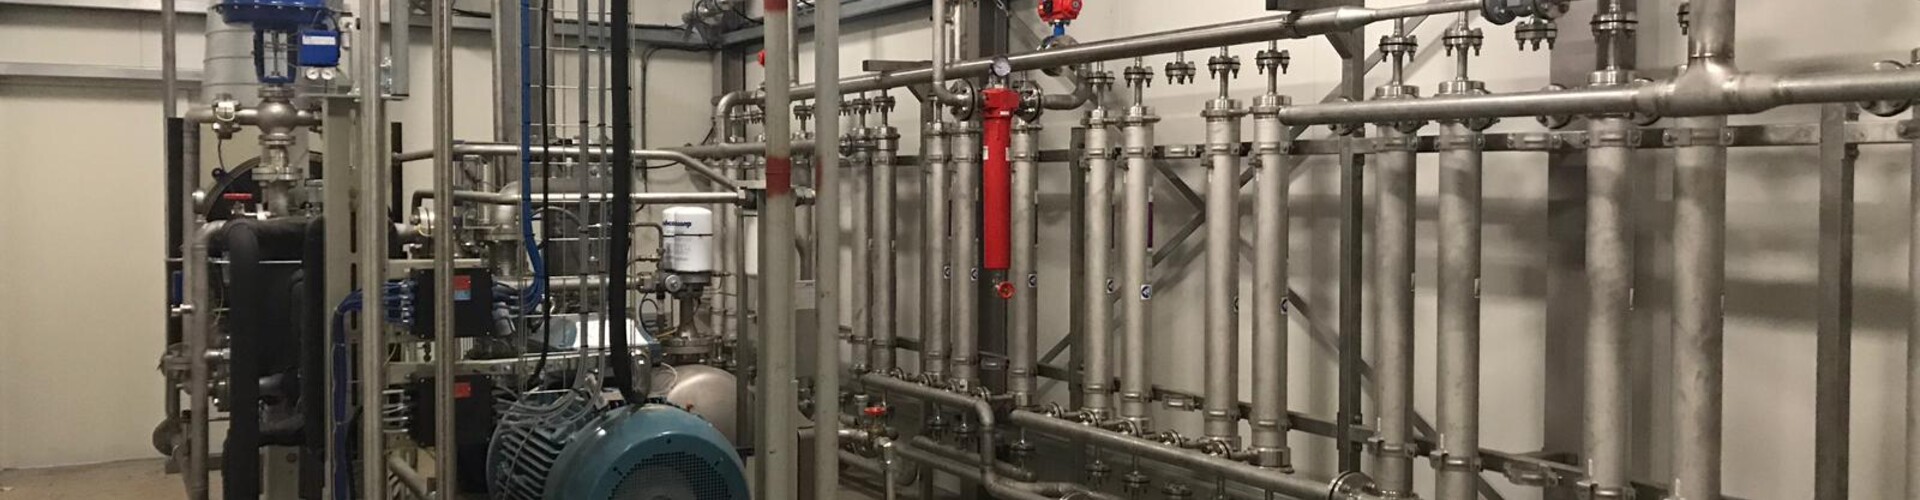 Biogas upgrading installation Woudenberg, Netherlands